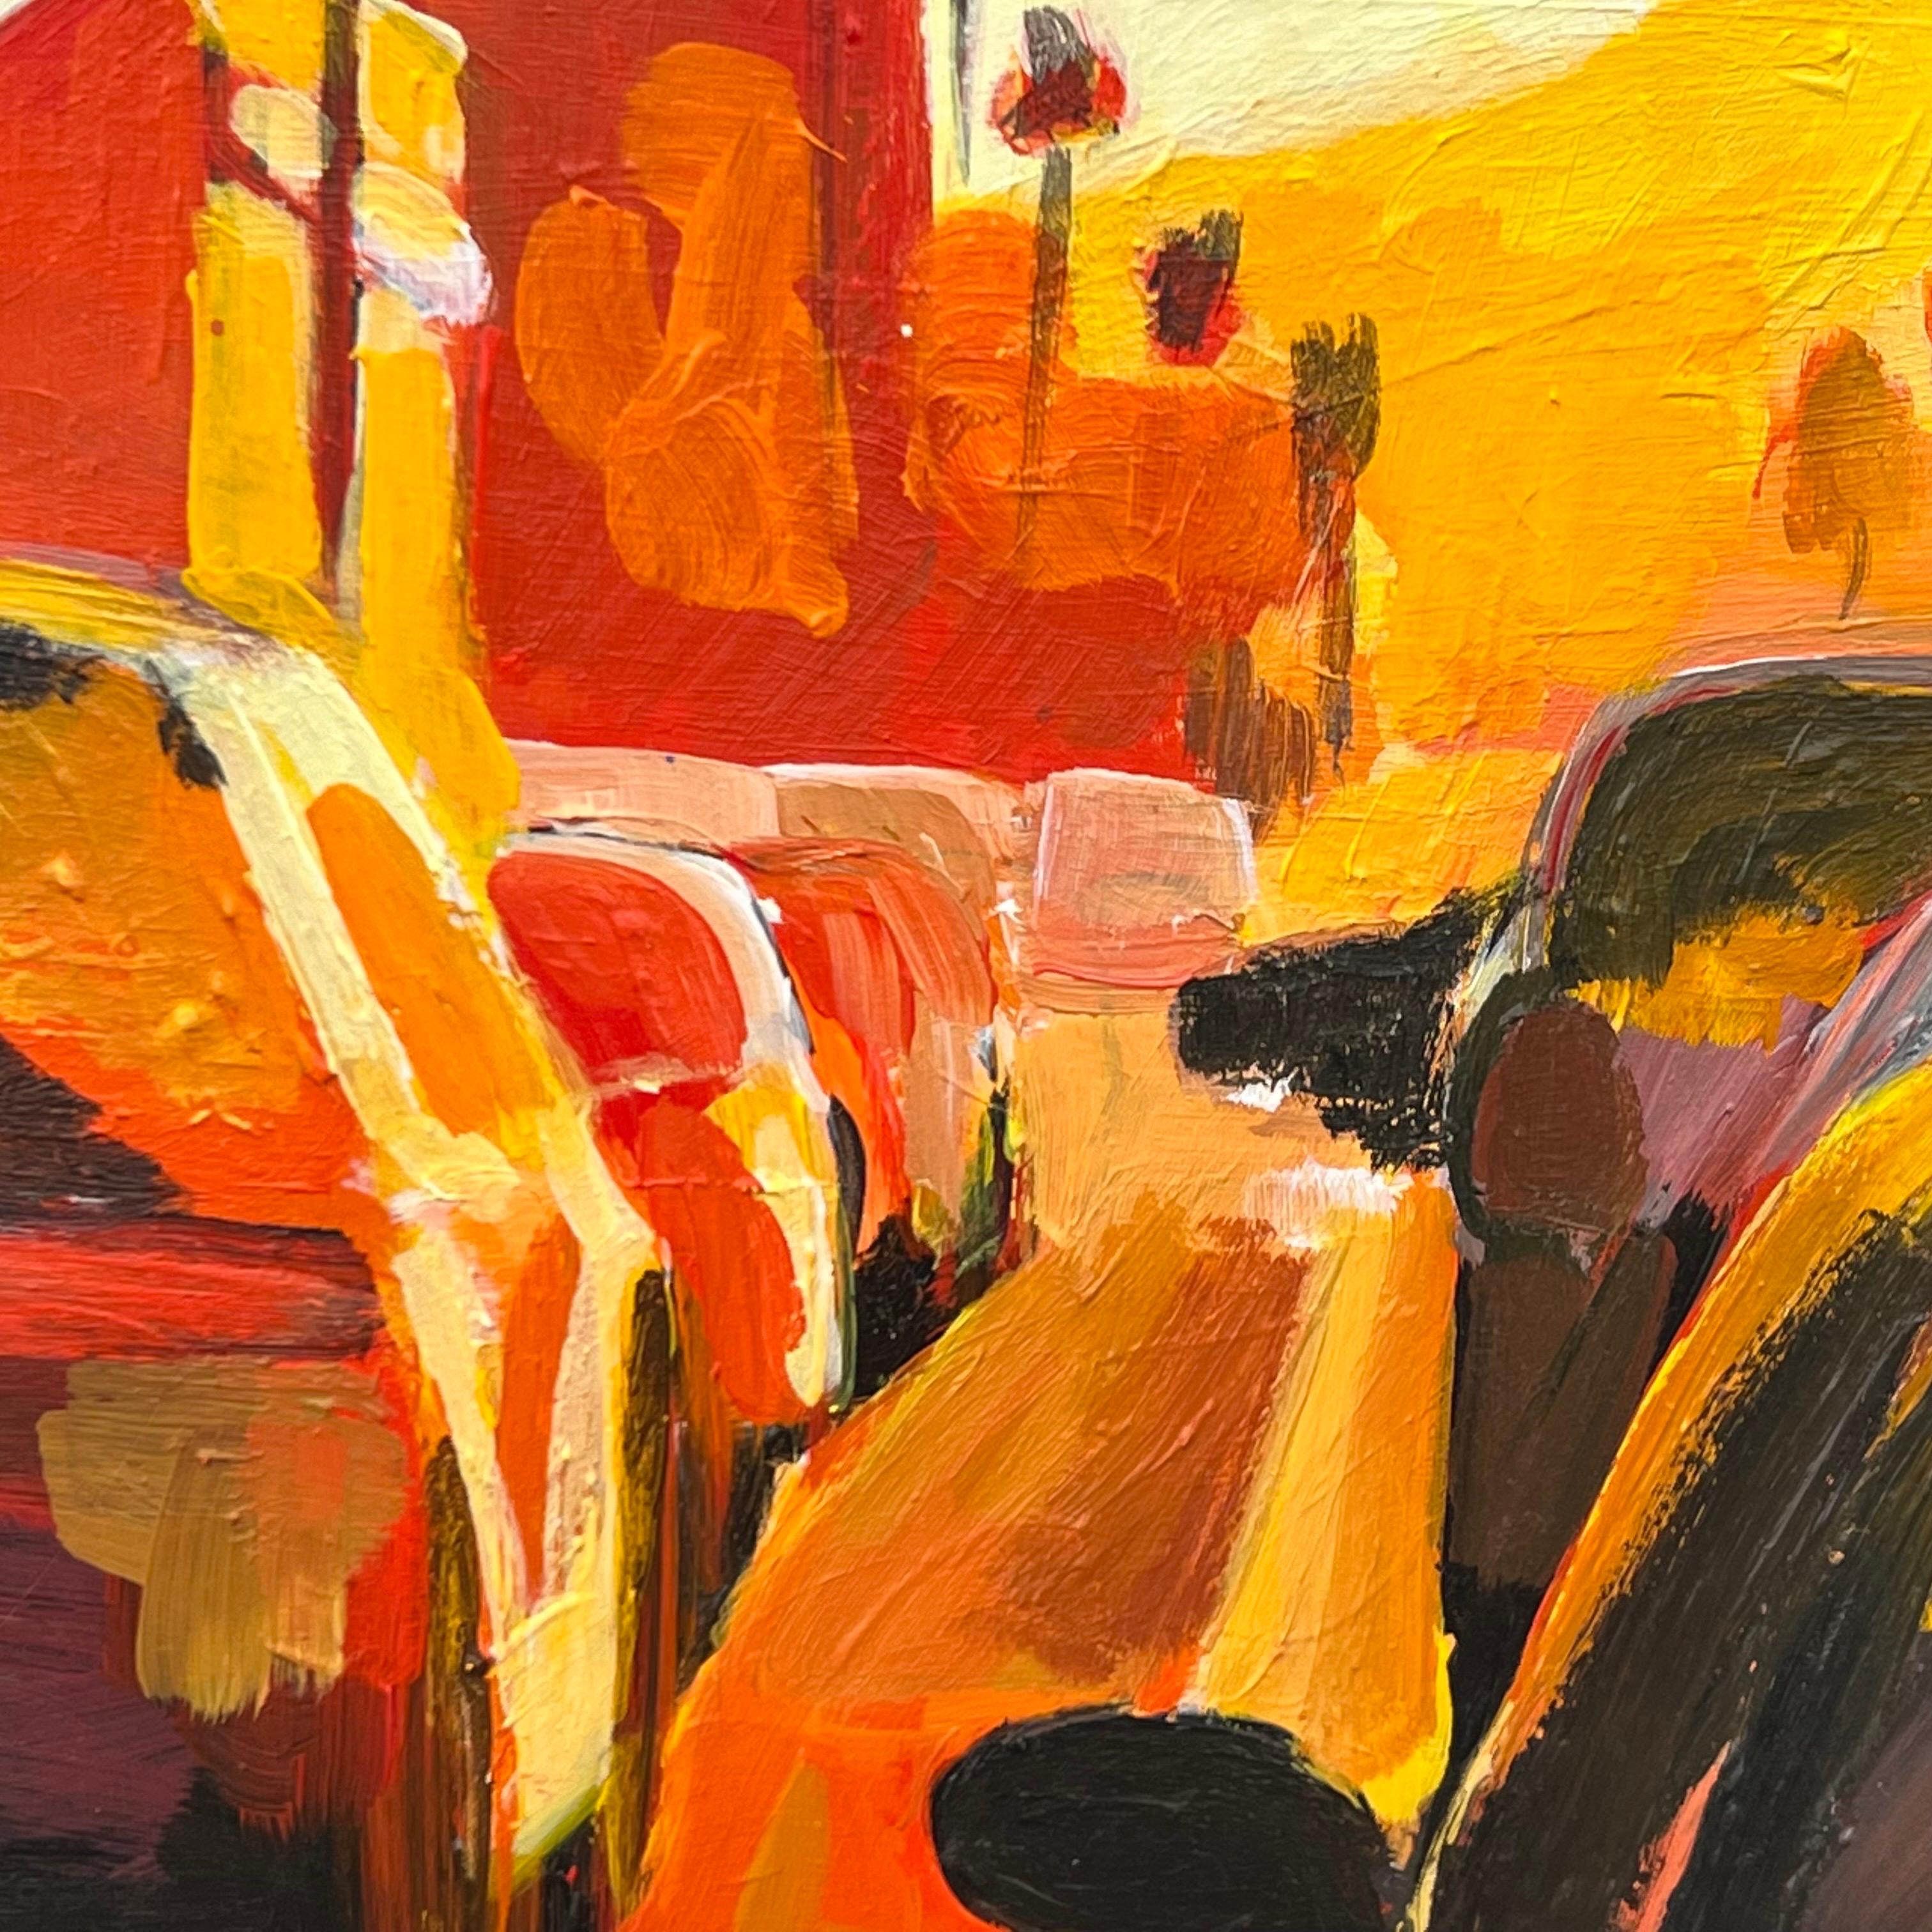 Los Angeles Traffic Street Scene Study from California Series by British Artist 2